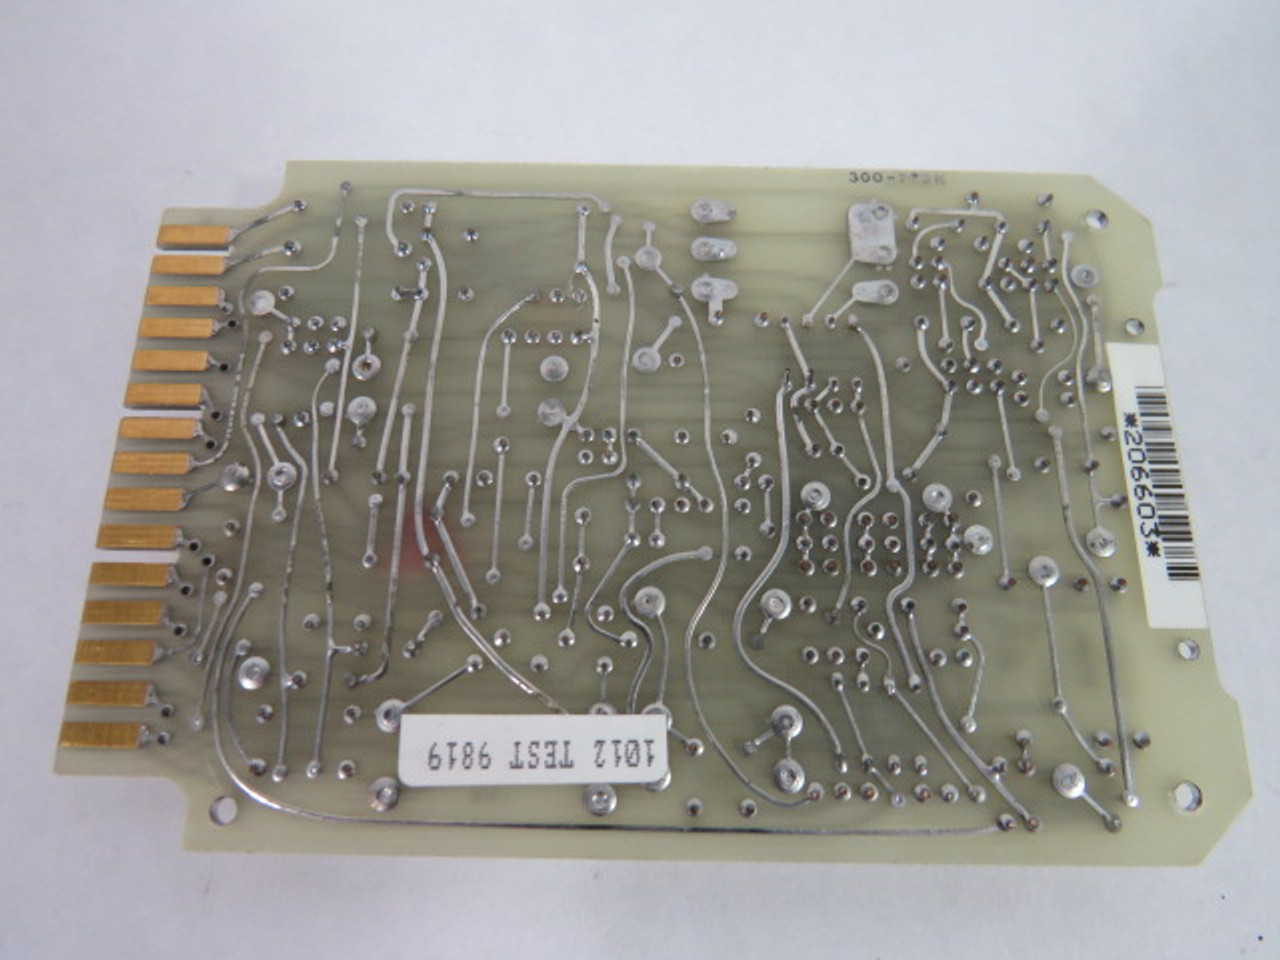 Unico 300-792-K 100-522.20 9819 Power Supply Circuit Board USED